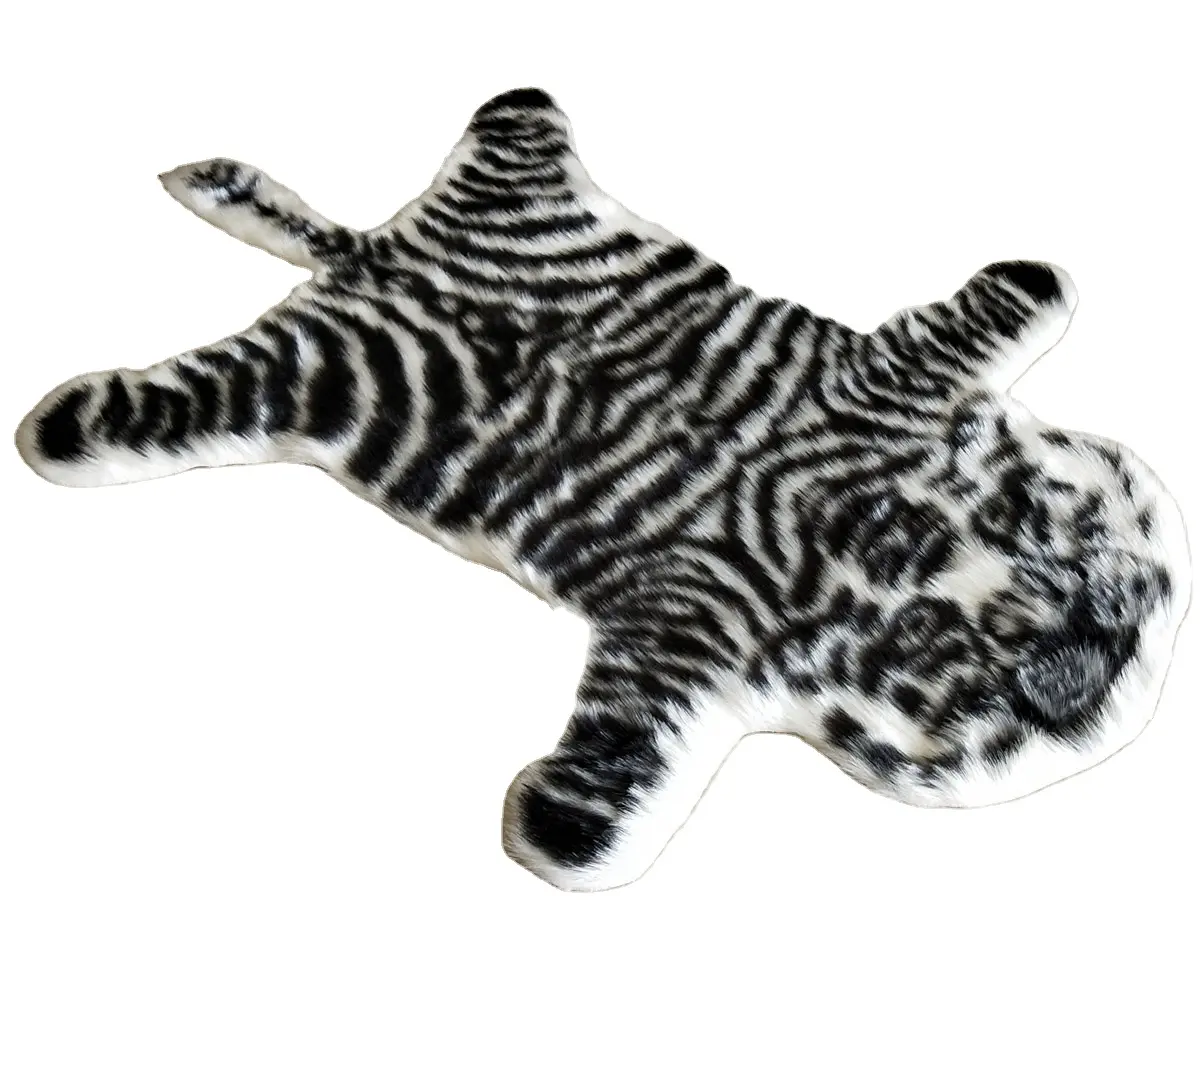 Tierform Jacquard Tiger Design 100% Acryl Anti-Rutsch-Kunst pelz matte 60*90cm